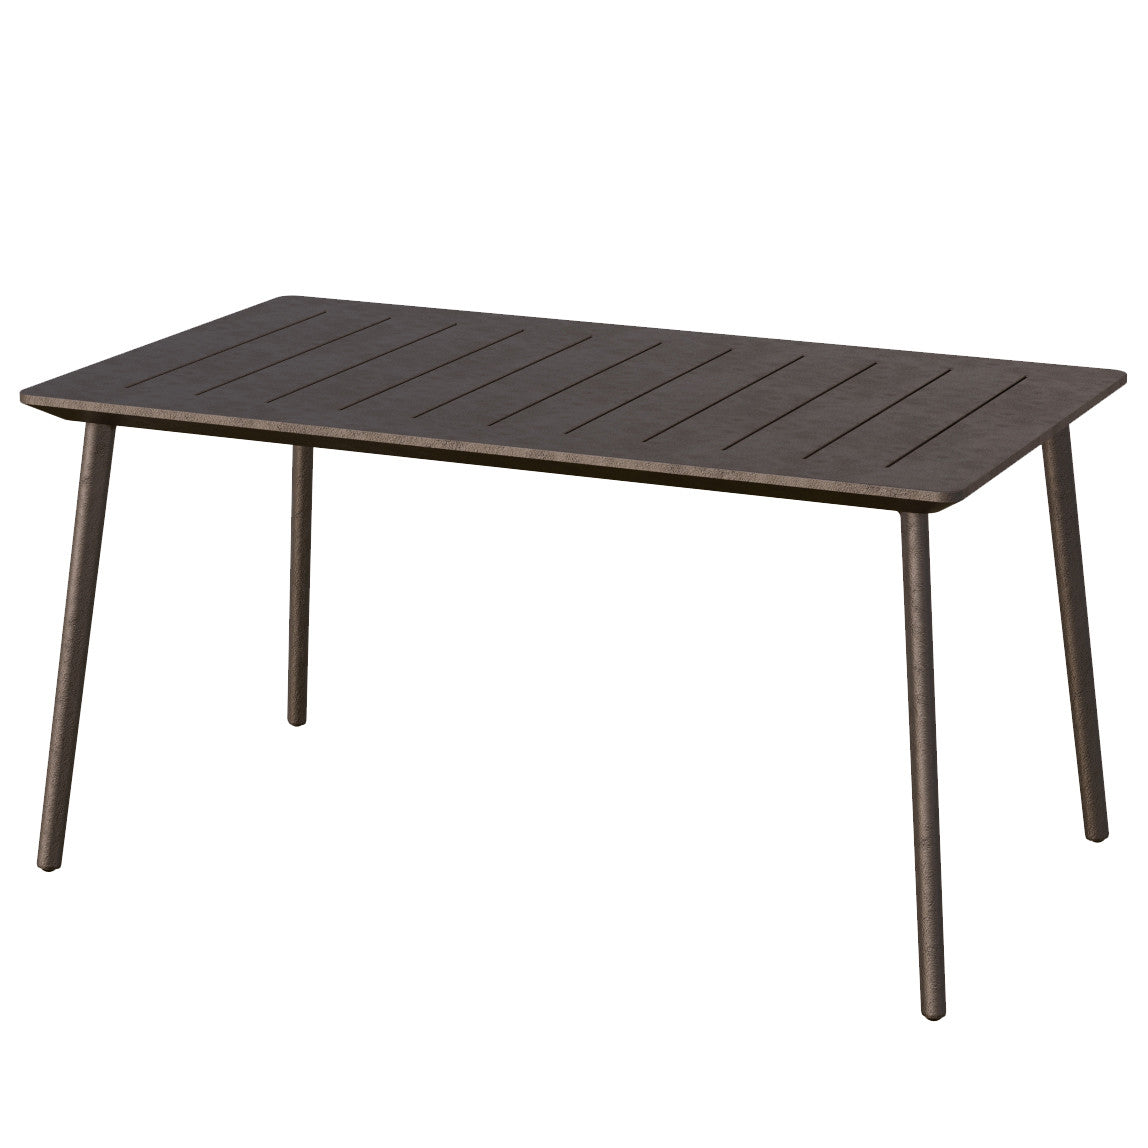 Keter tavolo cast iron cm. 150x90